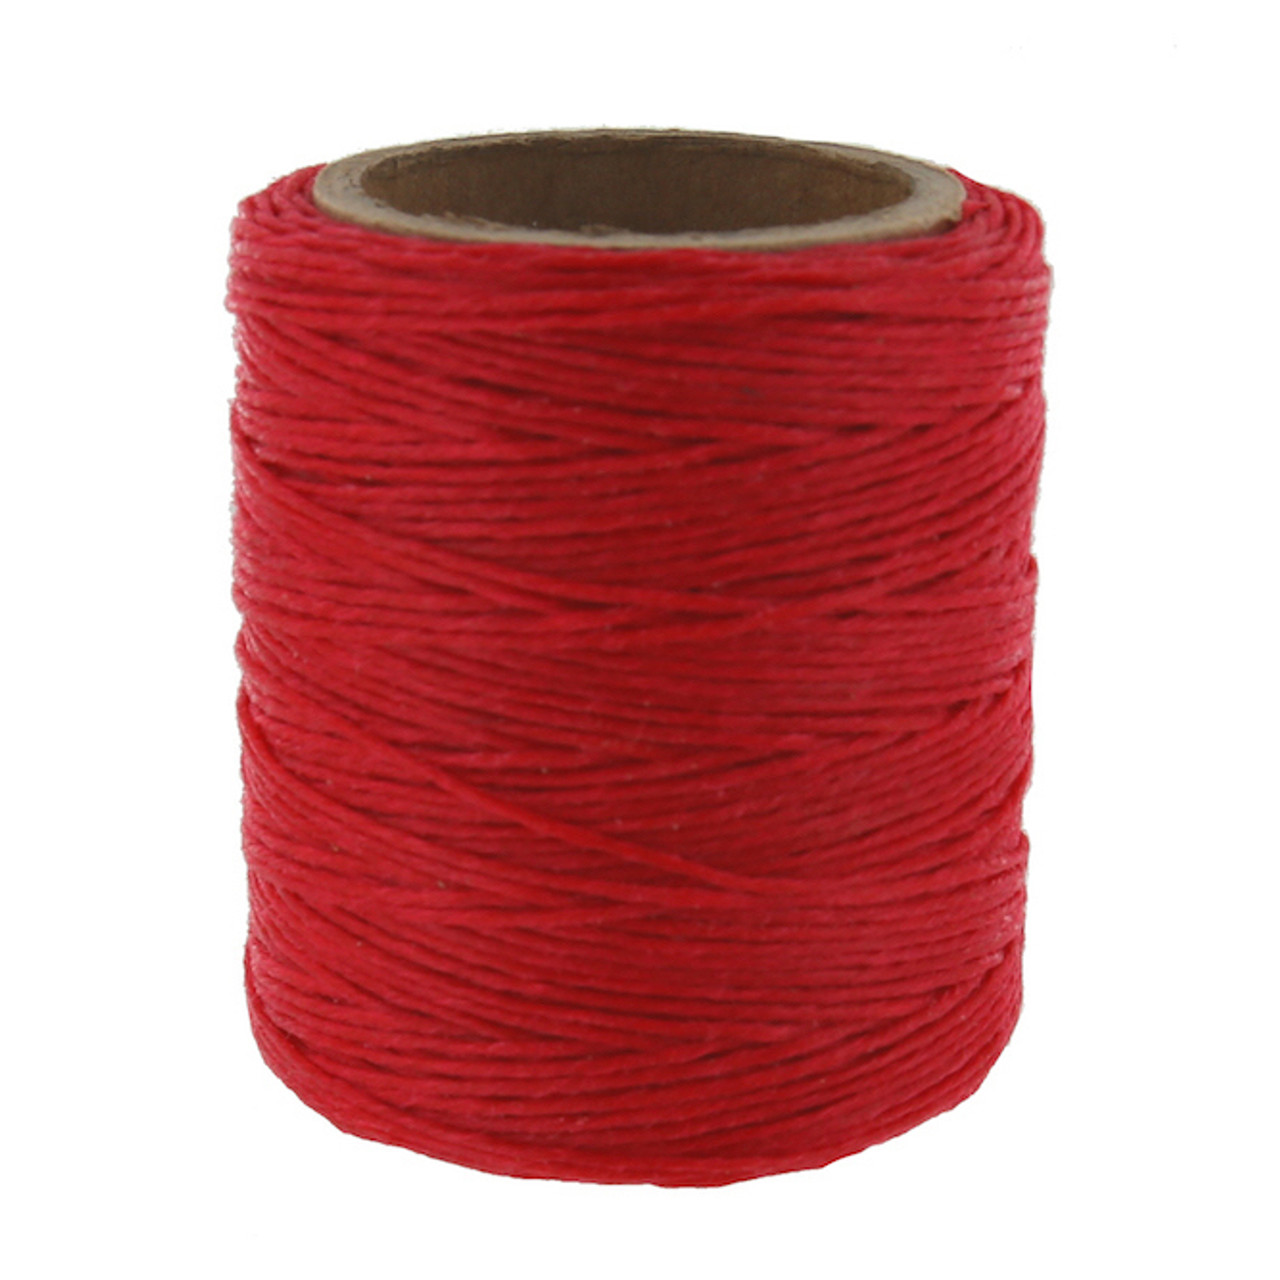 Maine Thread, Twisted Waxed Cord, 70 yard spool, Flame Red